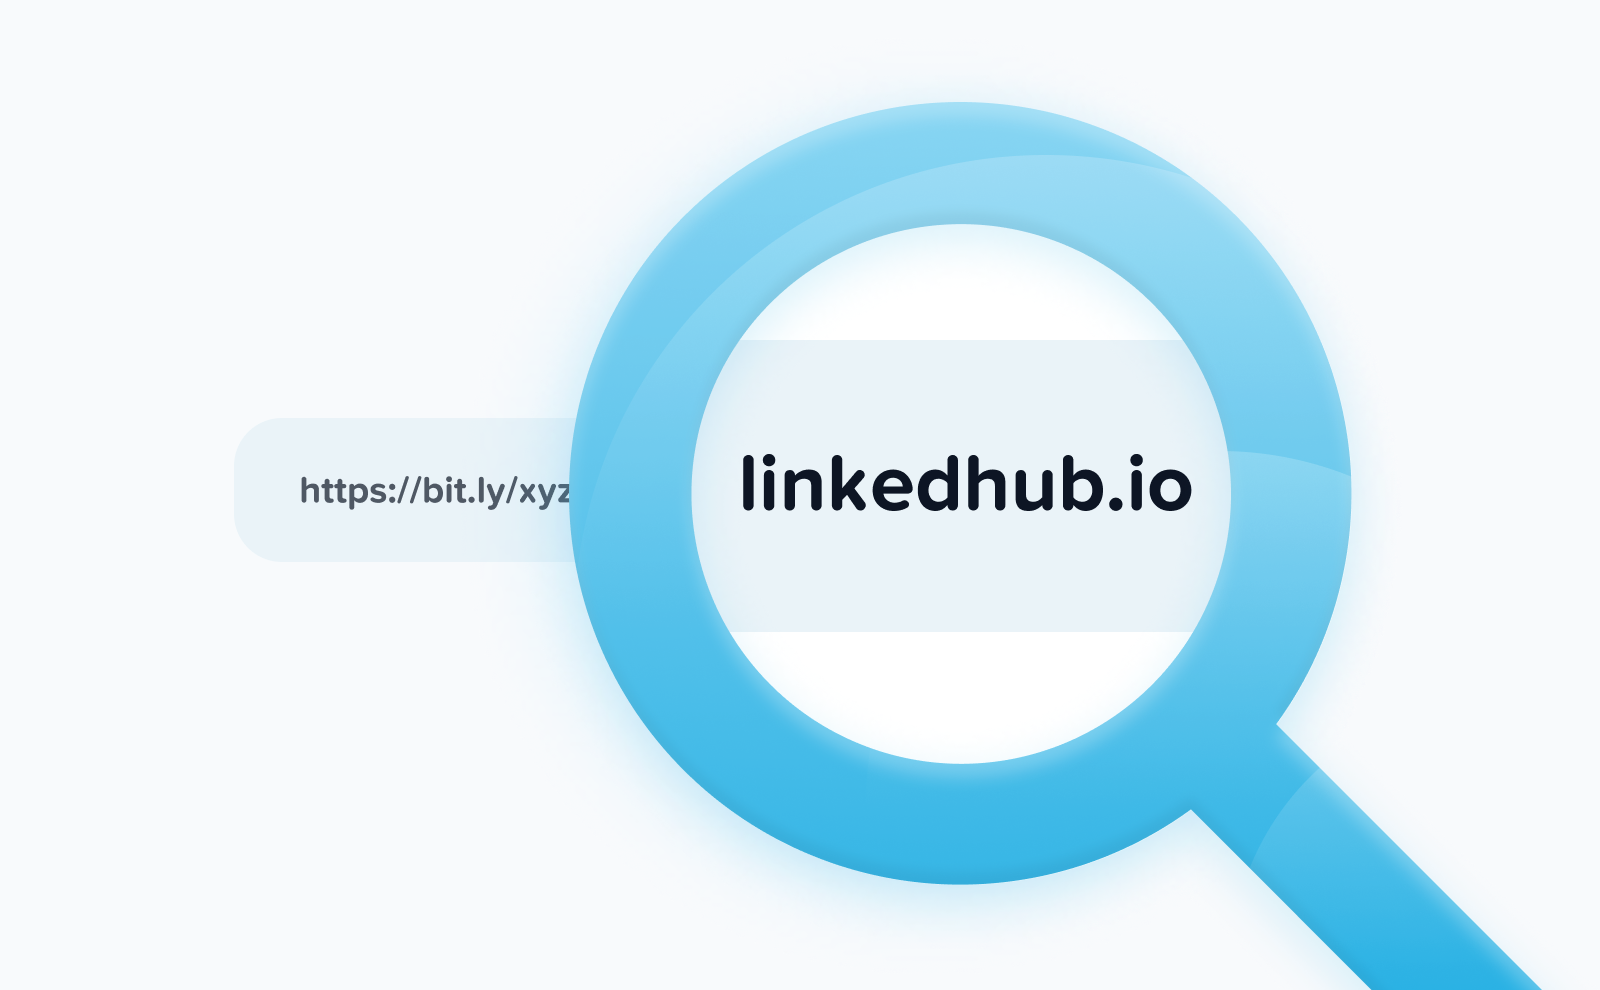 LinkedHub reveals the true URL automatically